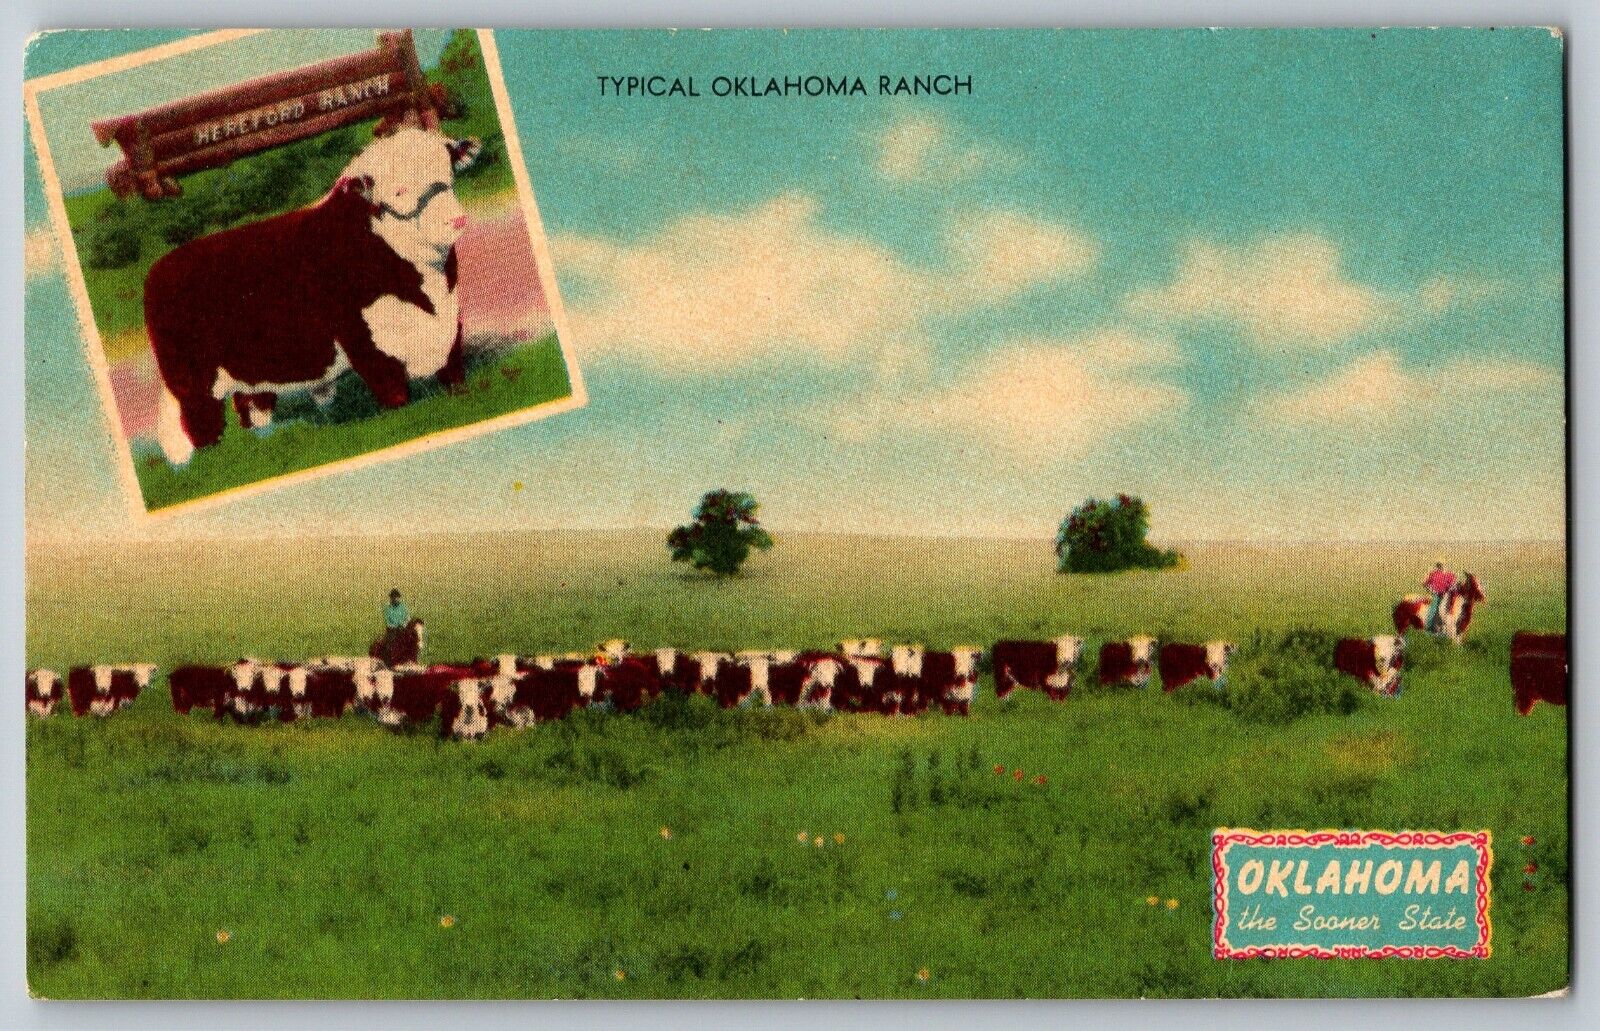 Oklahoma - Typical Oklahoma Ranch, Natural Live Stock Country - Vintage Postcard